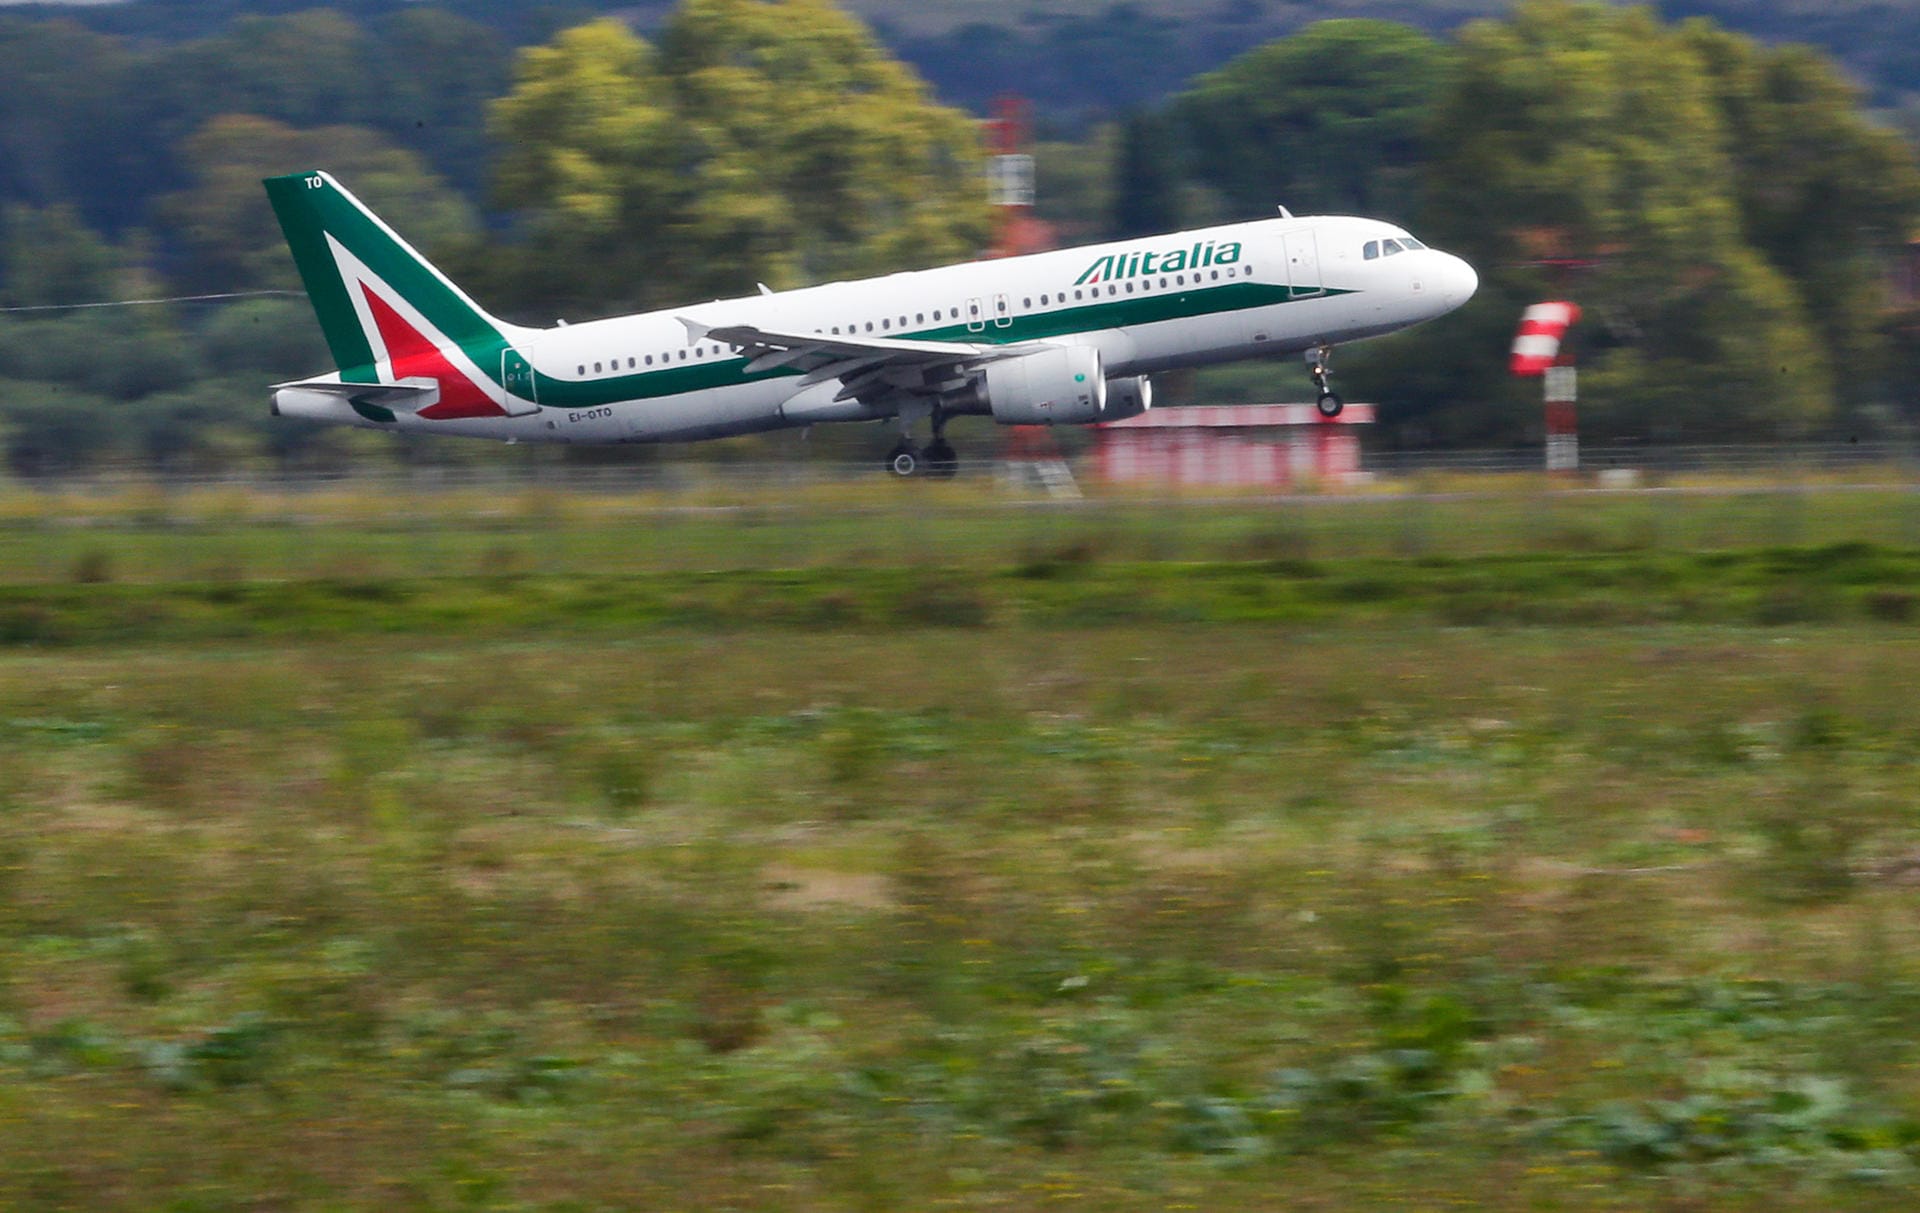 Platz 9: Alitalia. Diese Maschine wurde am Fiumicino International Airport in Rom fotografiert.